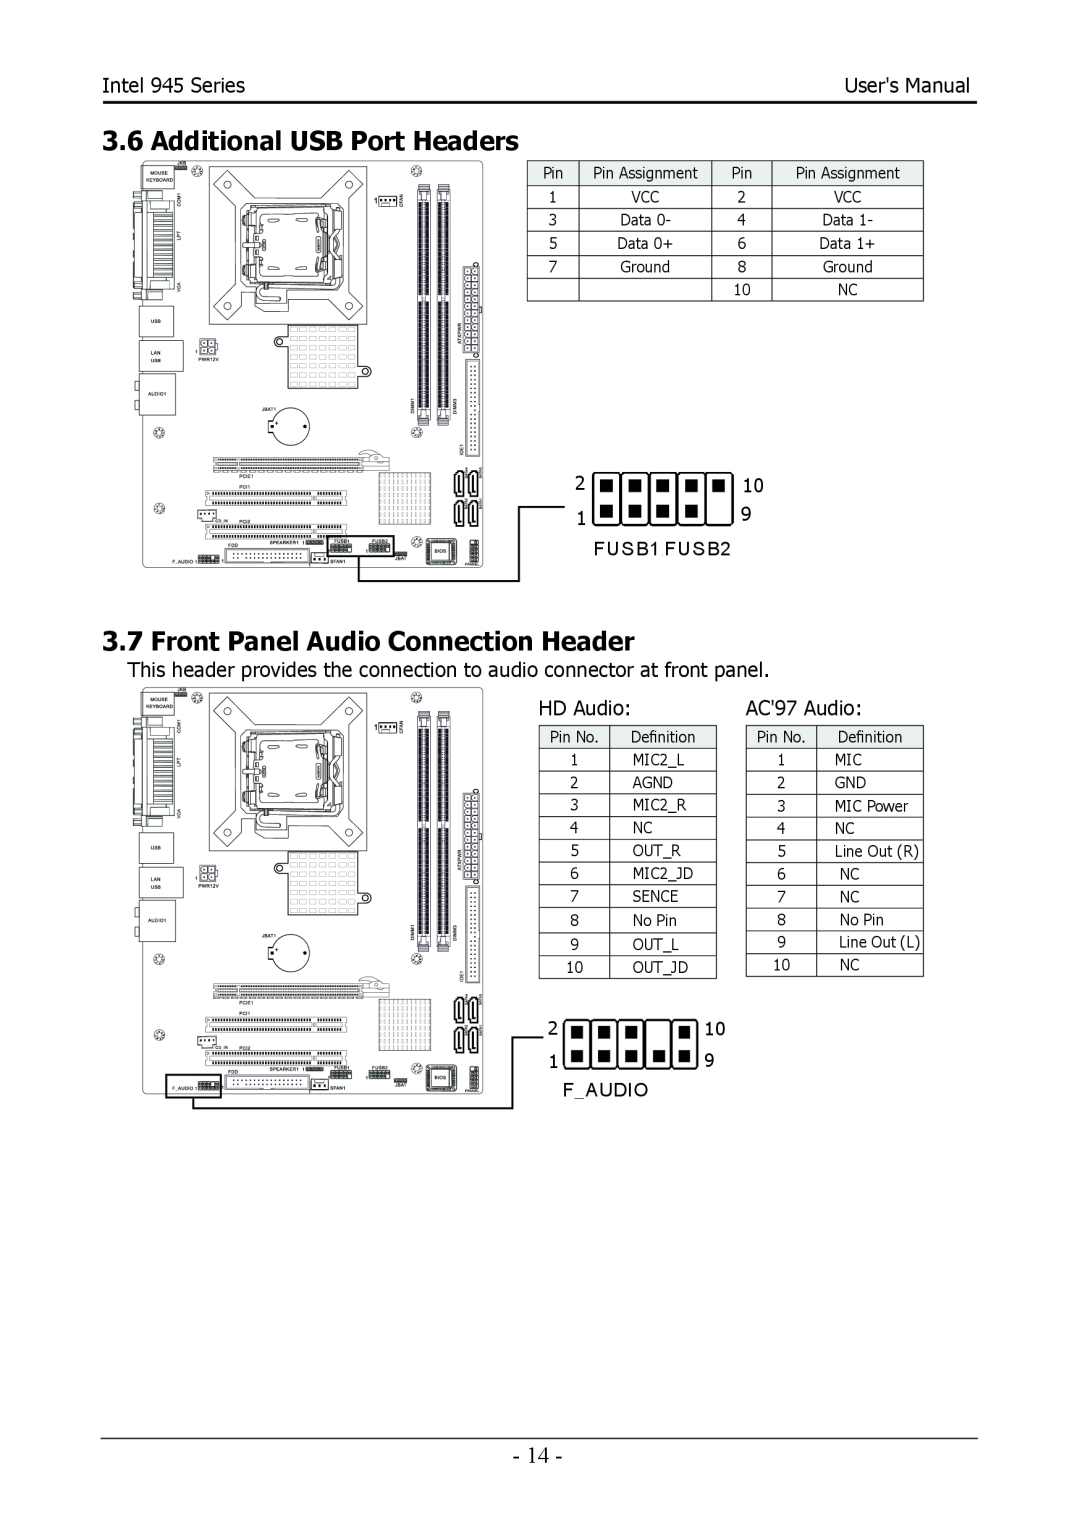 Intel 945GCT, 945GZT user manual Additional USB Port Headers, Front Panel Audio Connection Header, FUSB1, FUSB2, Faudio 